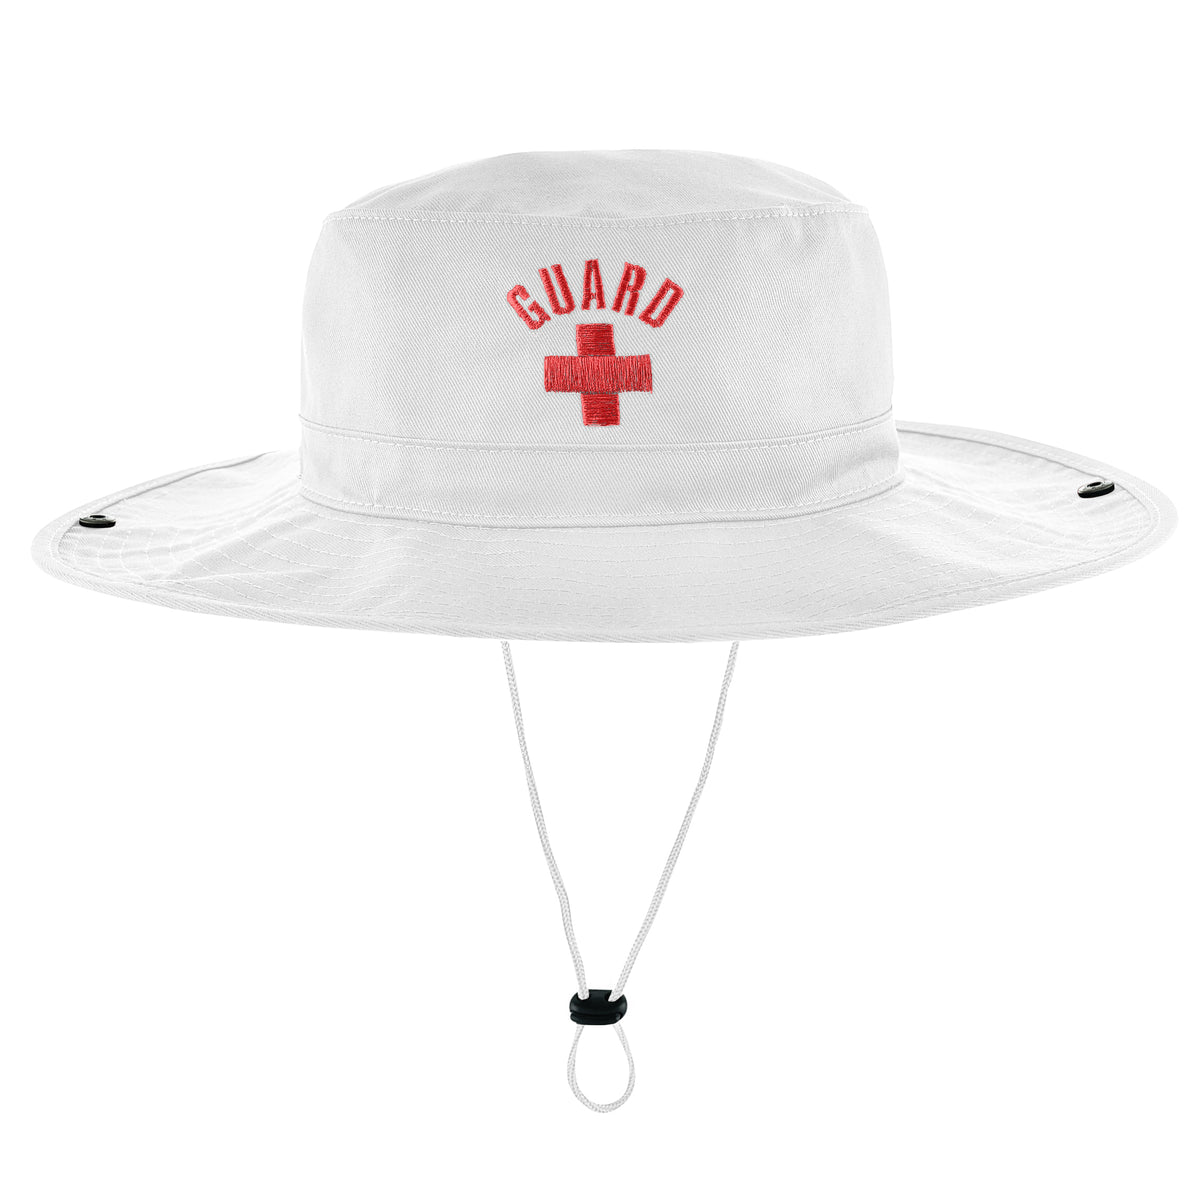 safari lifeguard hat